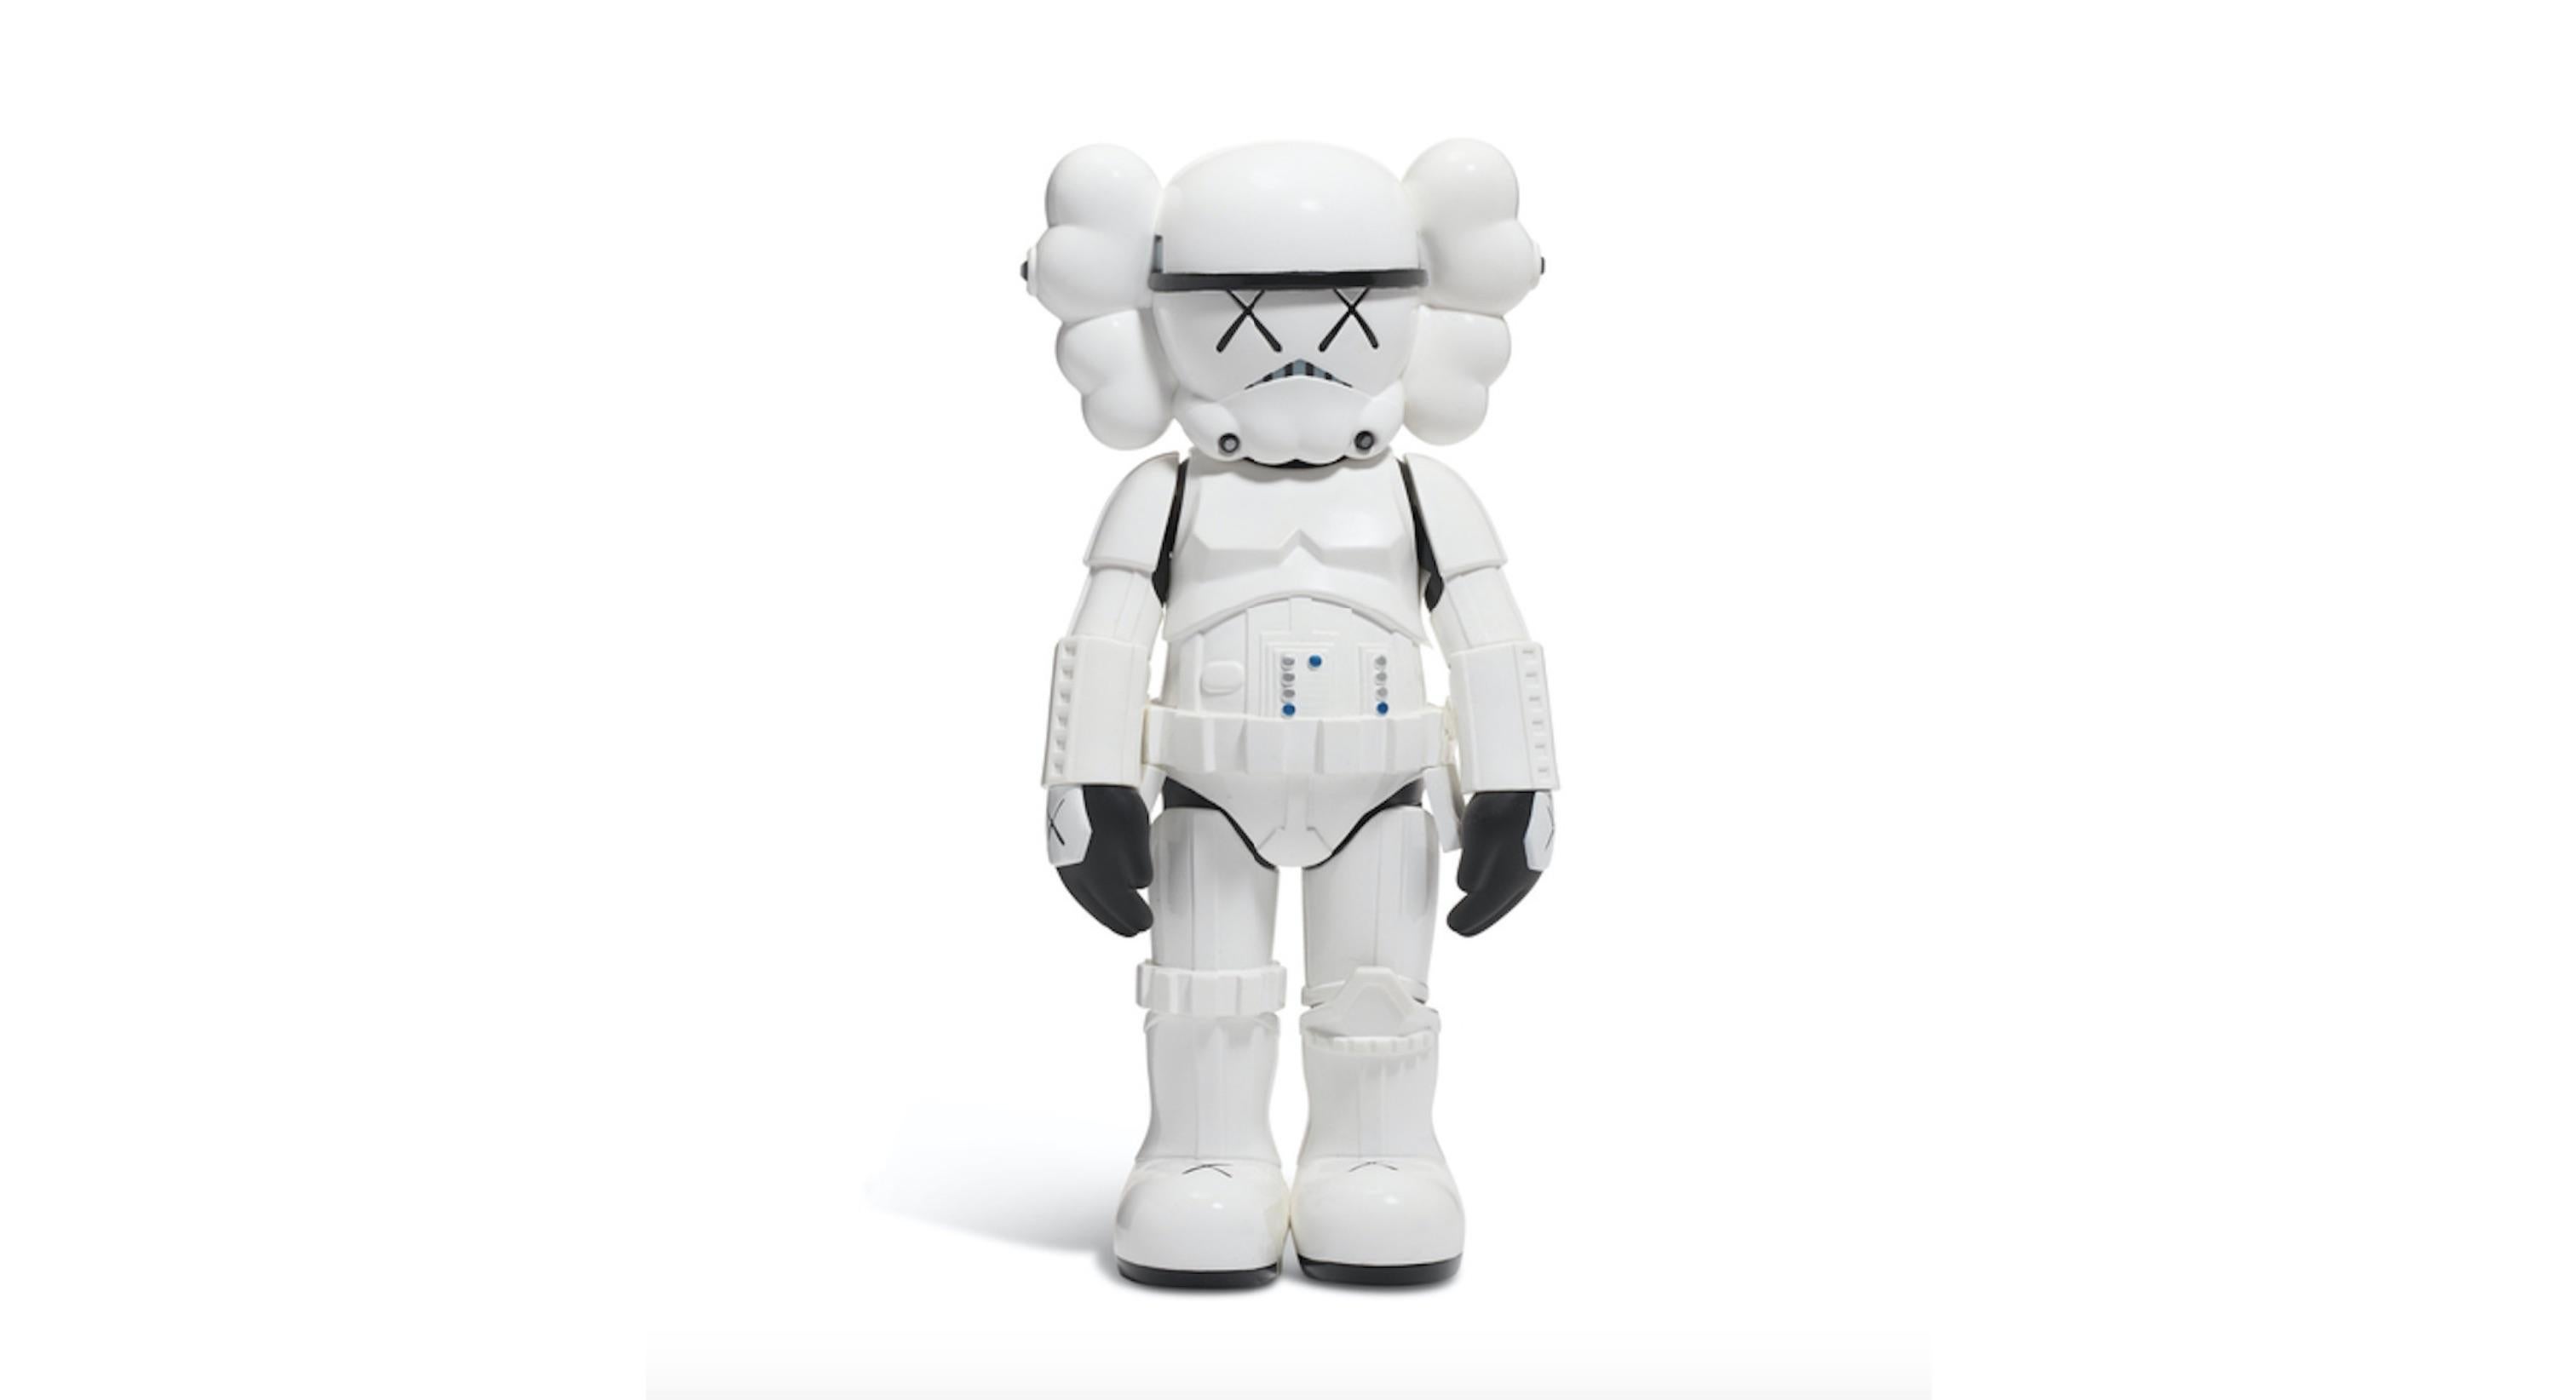 KAWS Figurative Sculpture - Stormtrooper Companion